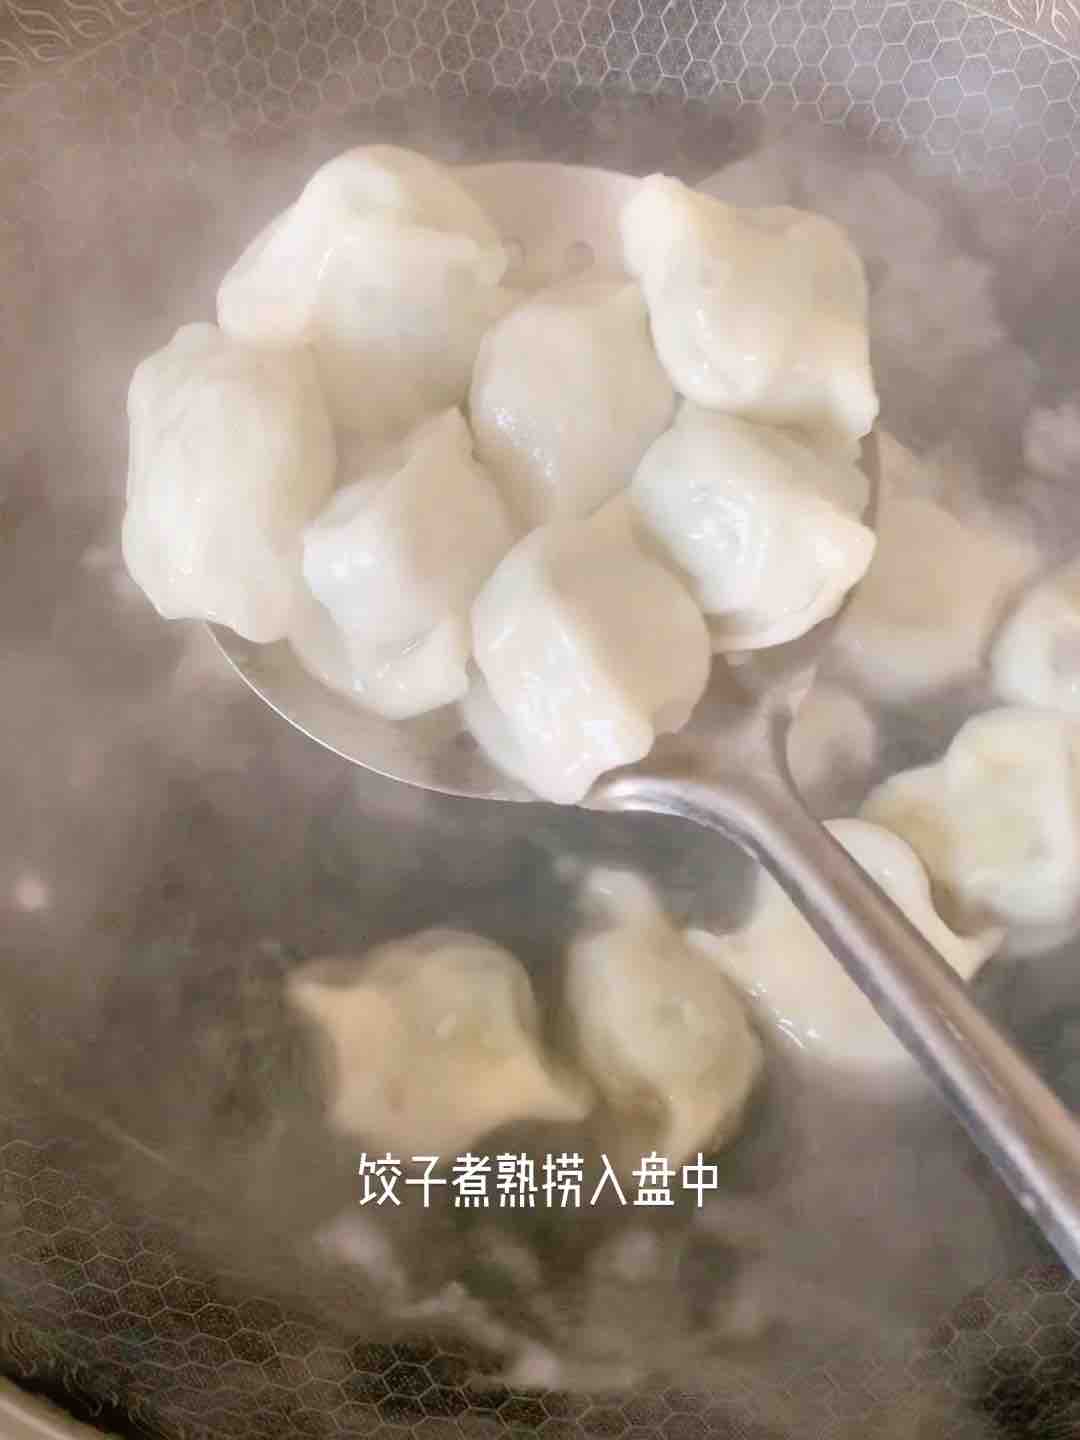 Hot and Sour Dumplings recipe